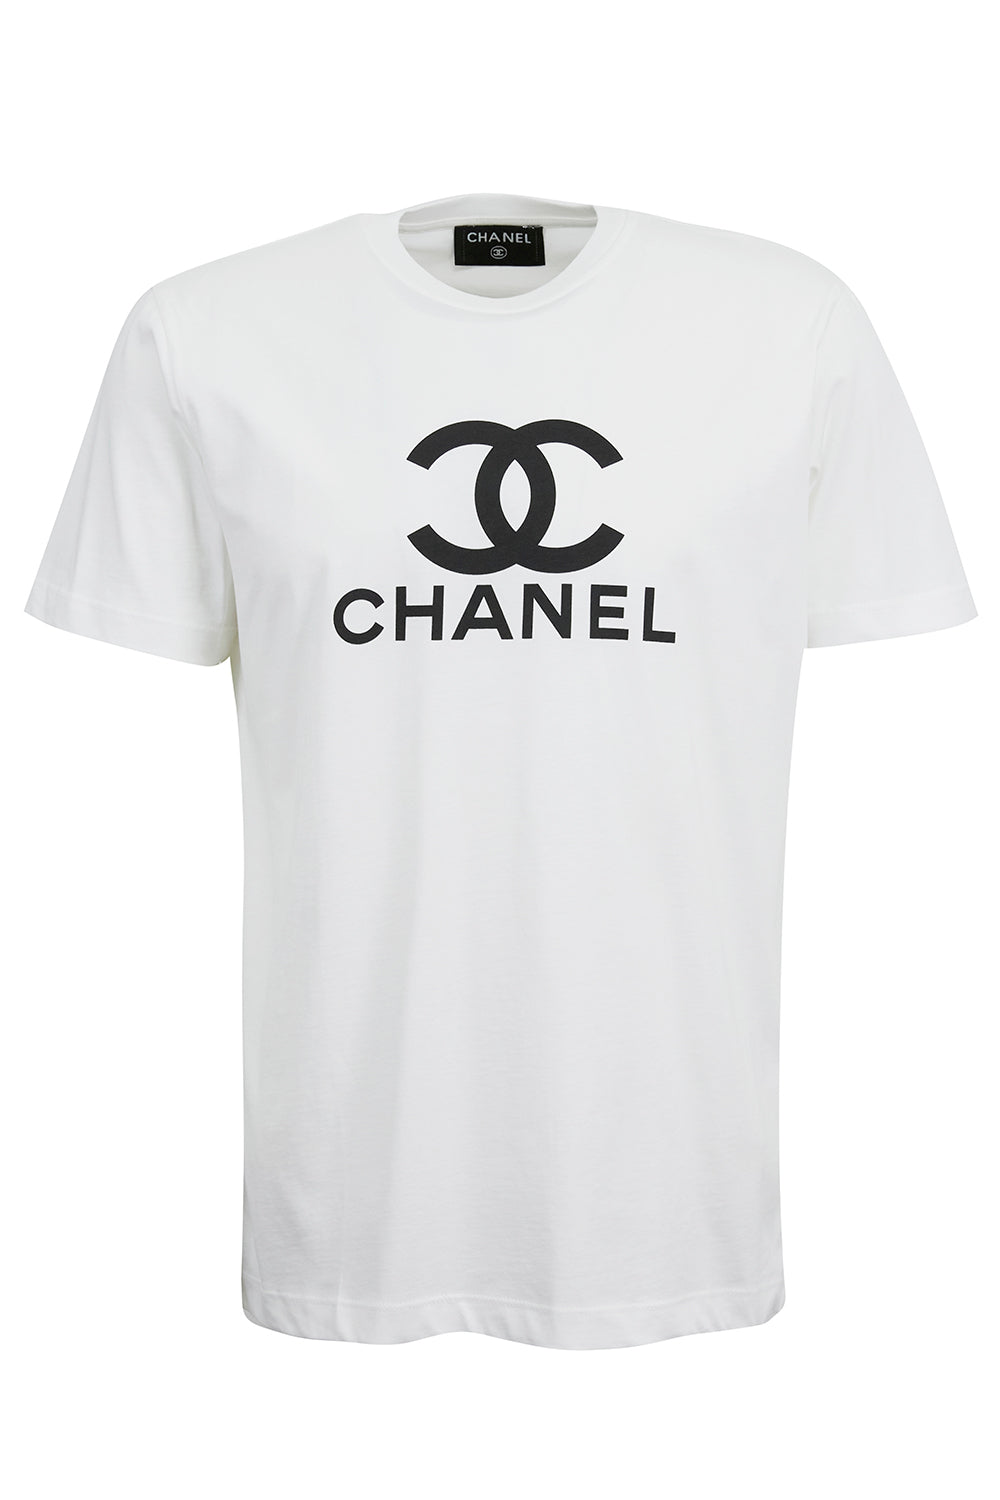 Chanel T Shirt Men 